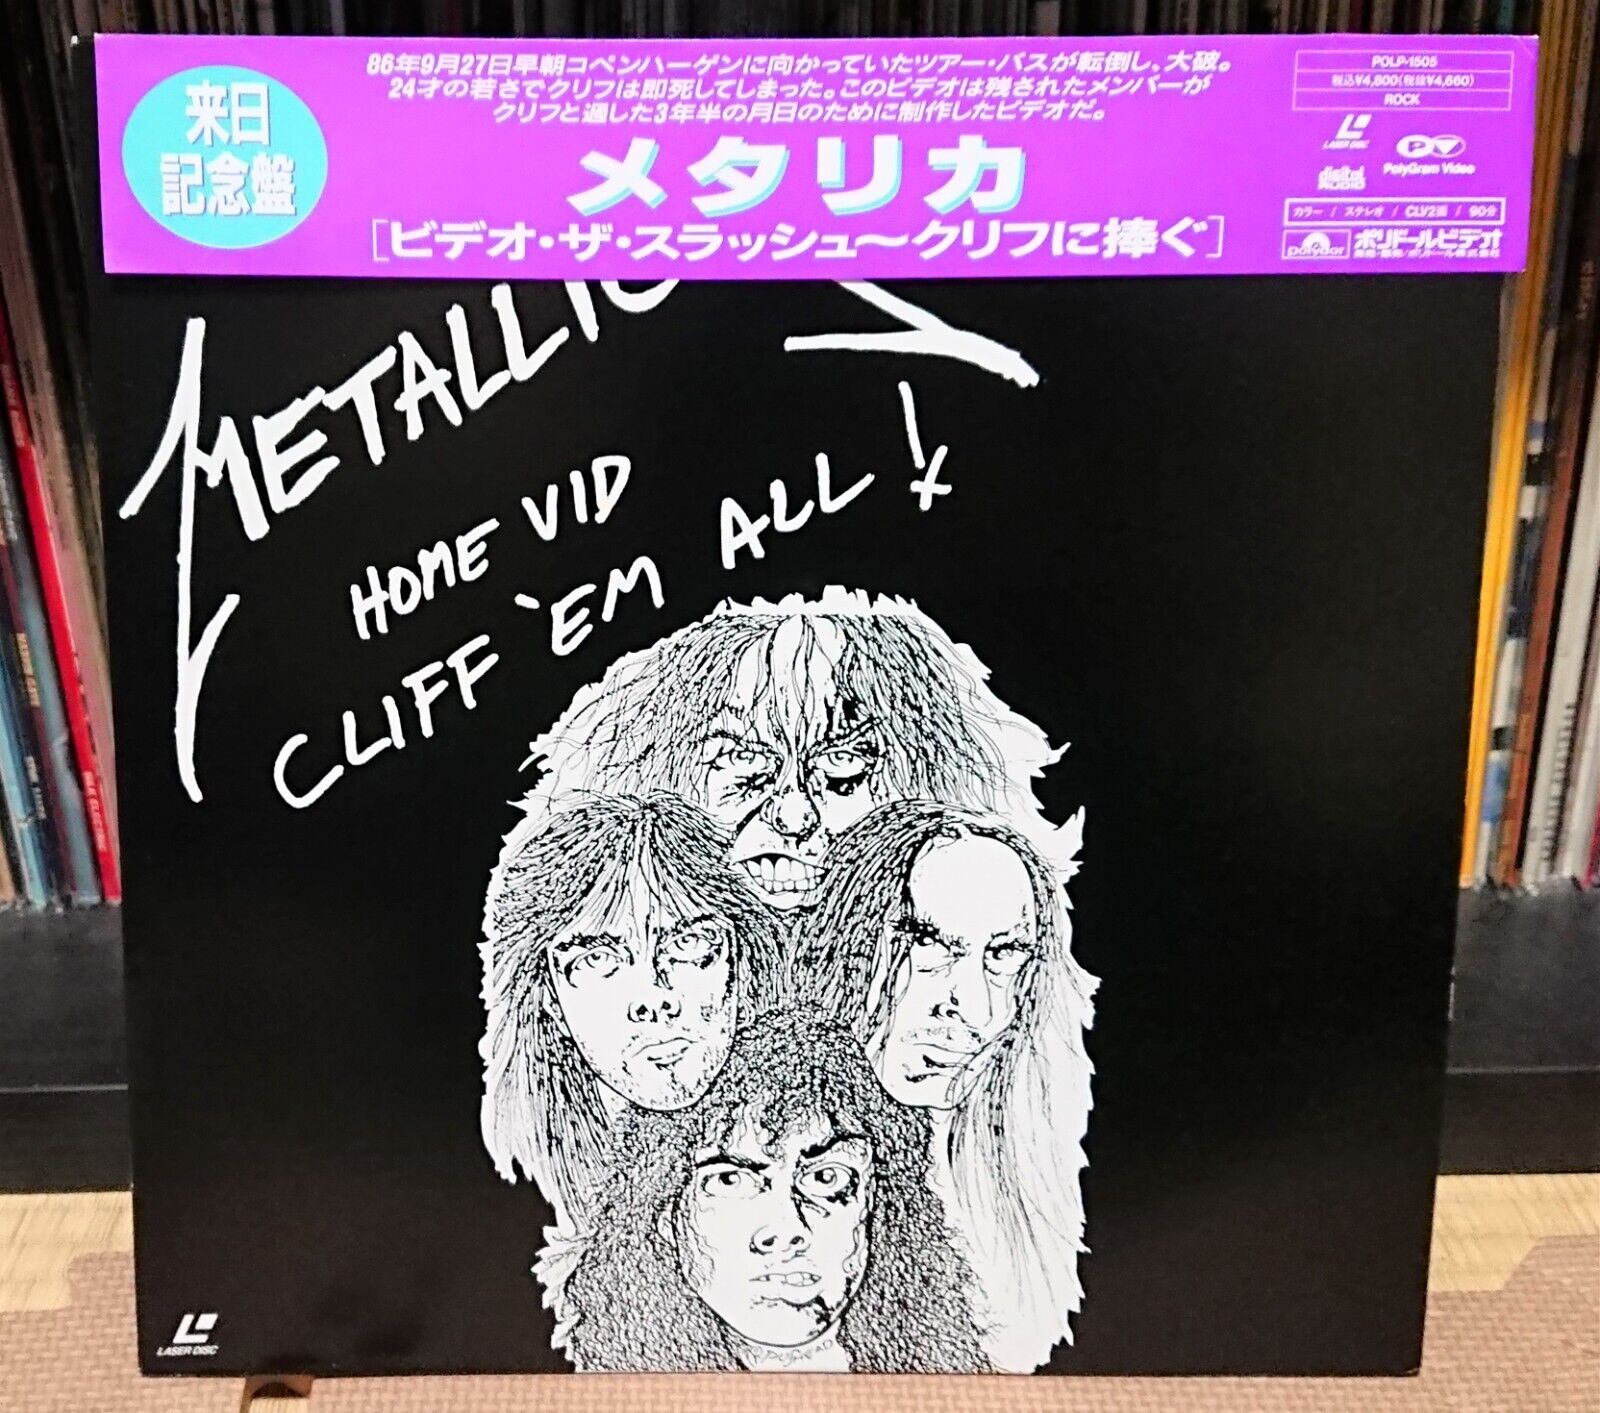 Metallica – Home Vid Cliff \'Em All / Japan 1993 Laserdisc NTSC POLP-1505 w/Obi